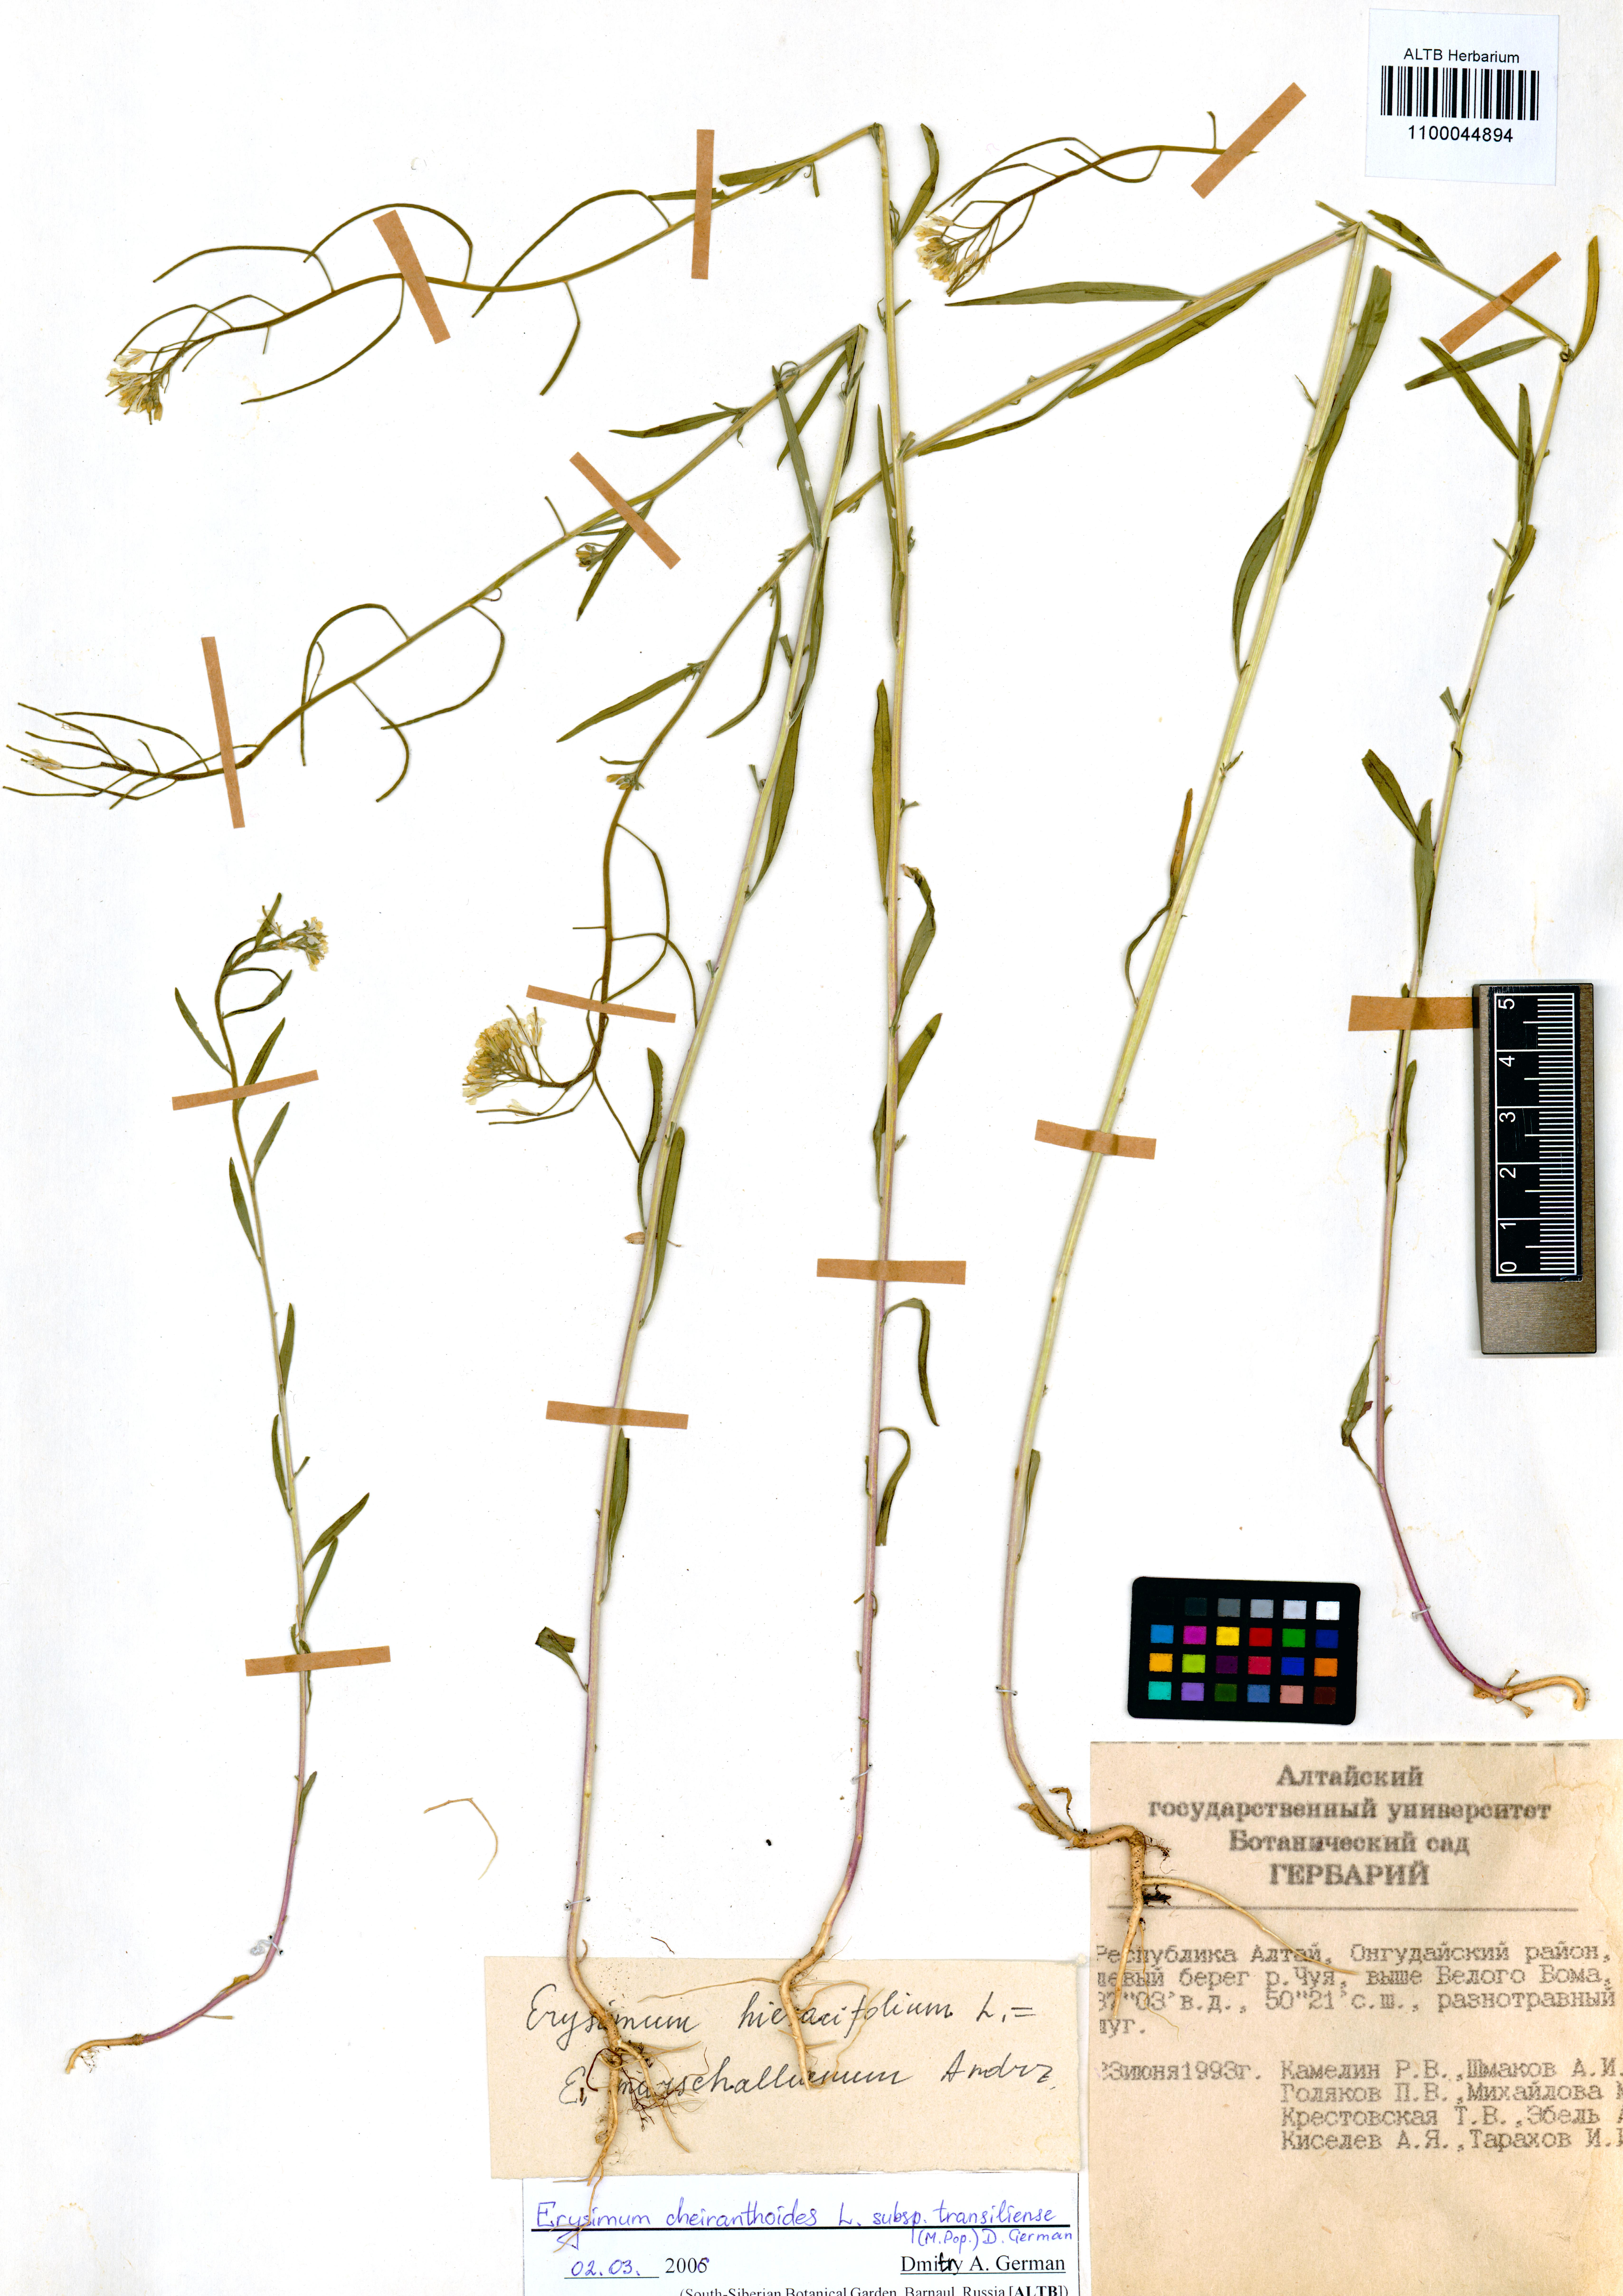 Erysimum cheiranthoides subsp. transiliense (Popov) D.A.German